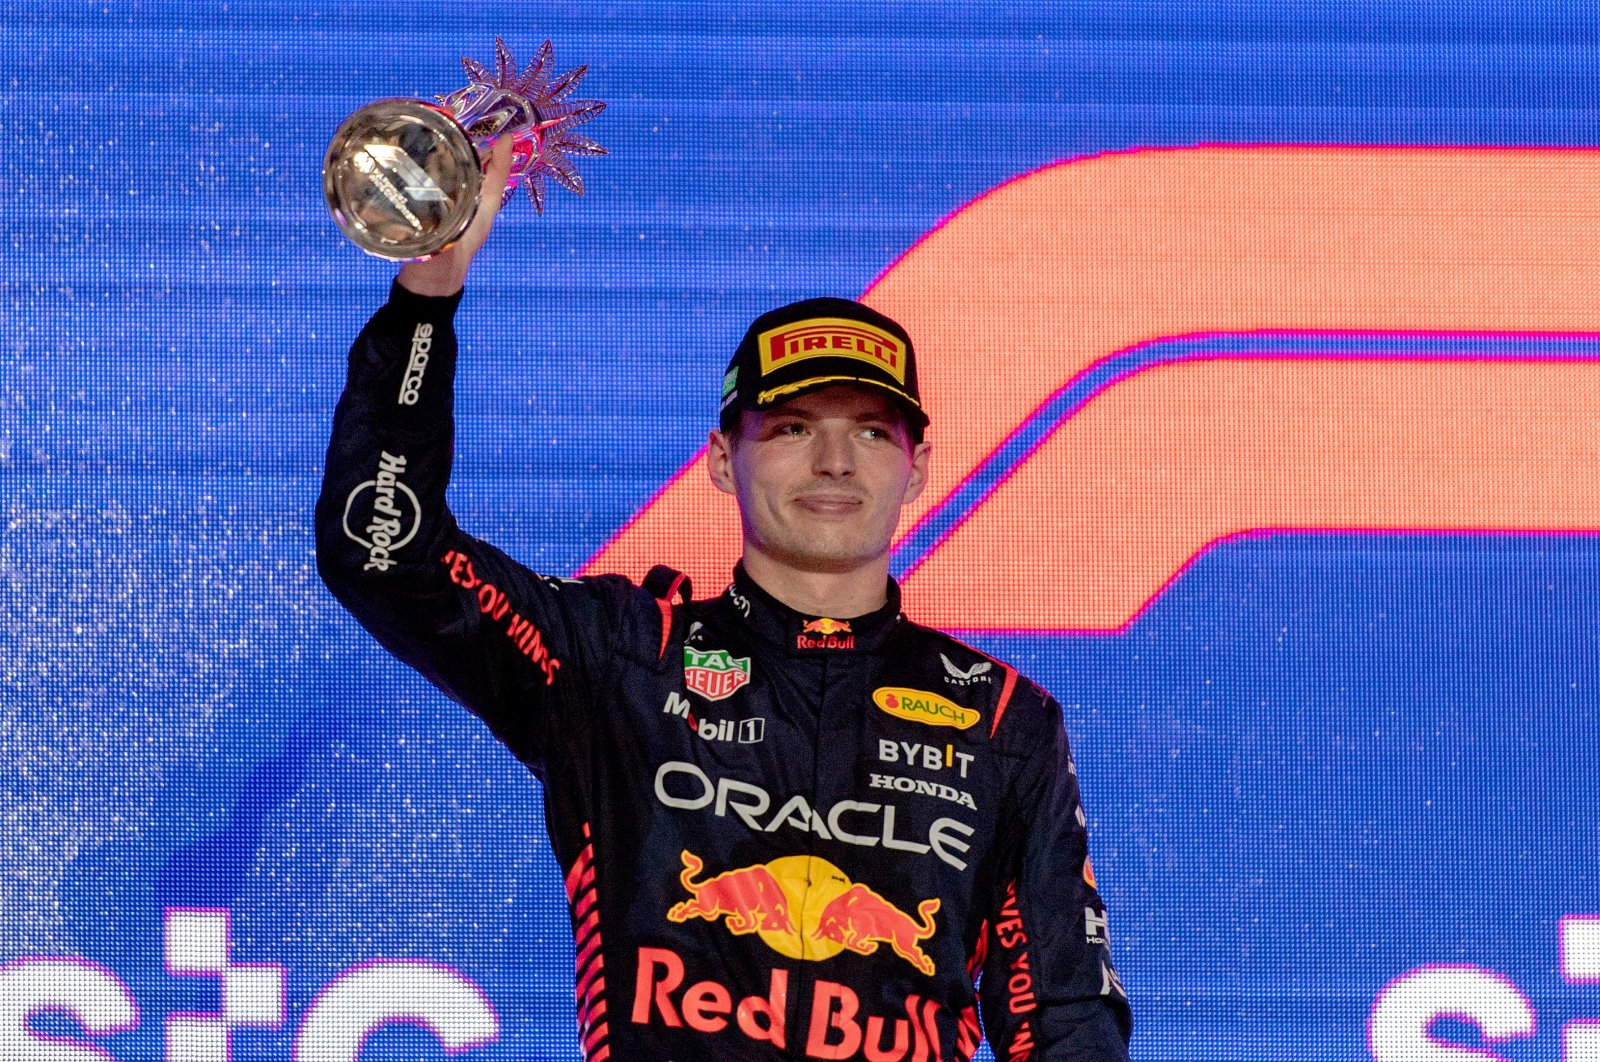 Dutch driver Max Verstappen of Red Bull Racing during the podium ceremony for the Formula One Grand Prix of Saudi Arabia at the Jeddah Corniche Circuit, Jeddah, Saudi Arabia, March 19, 2023. (EPA Photo)